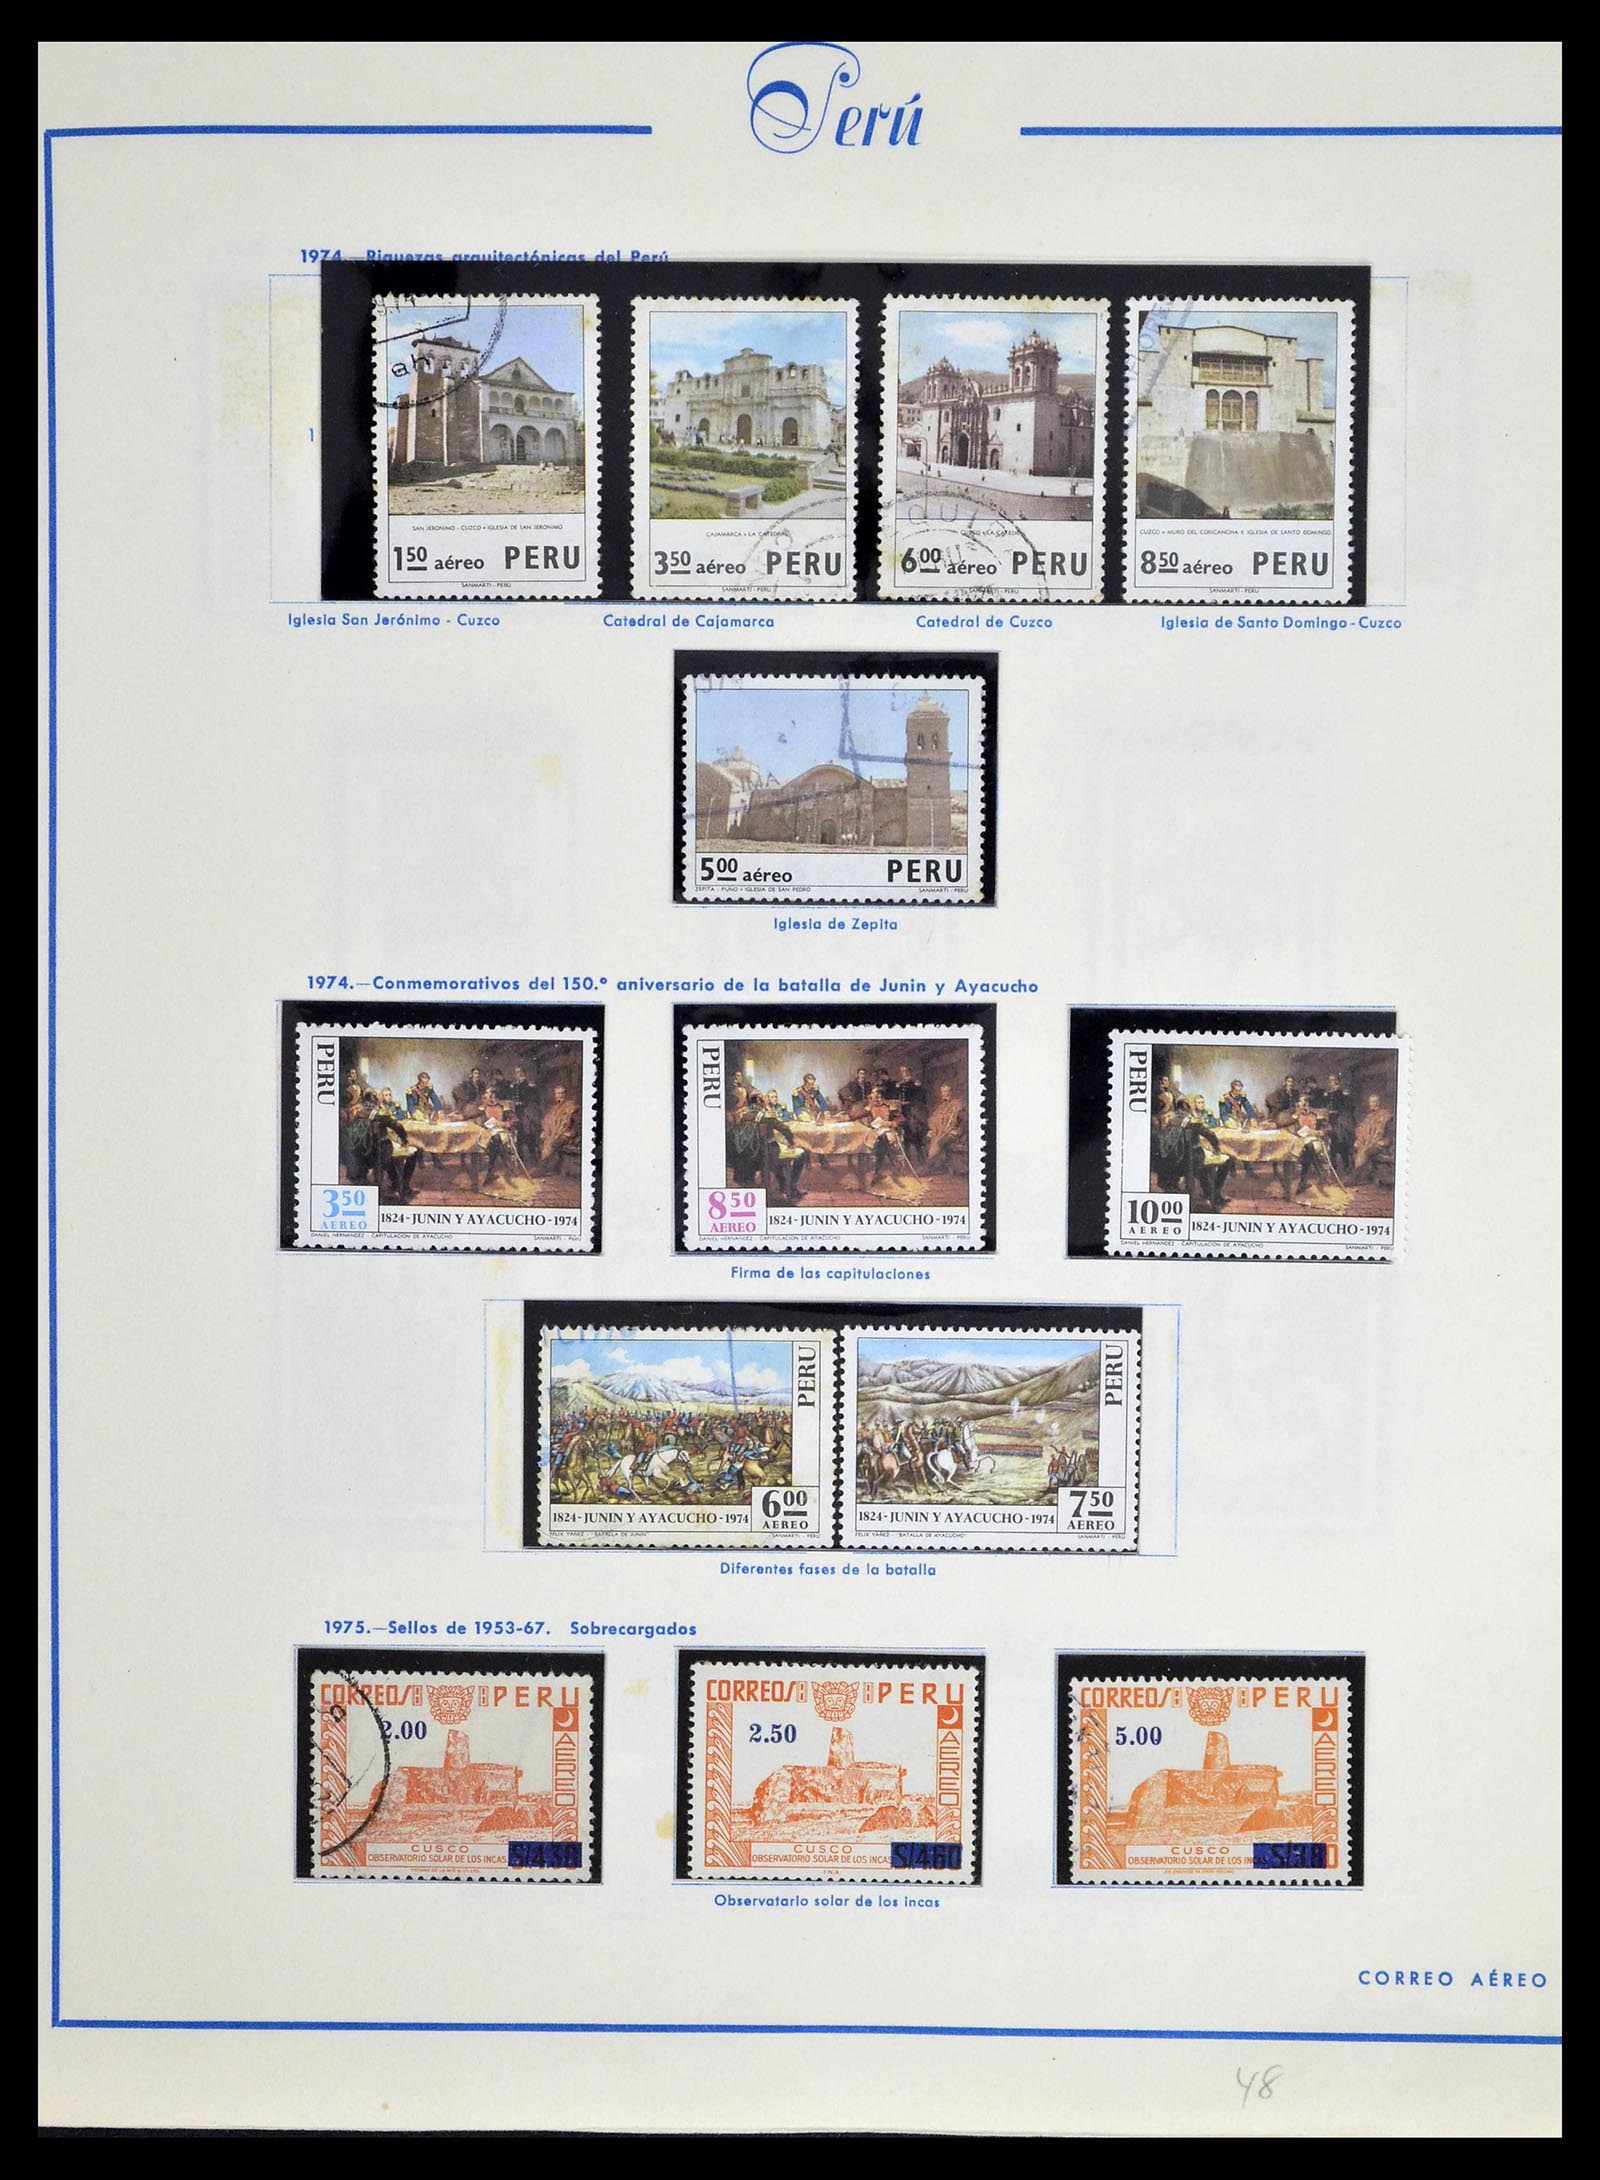 39214 0076 - Stamp collection 39214 Peru 1857-1981.